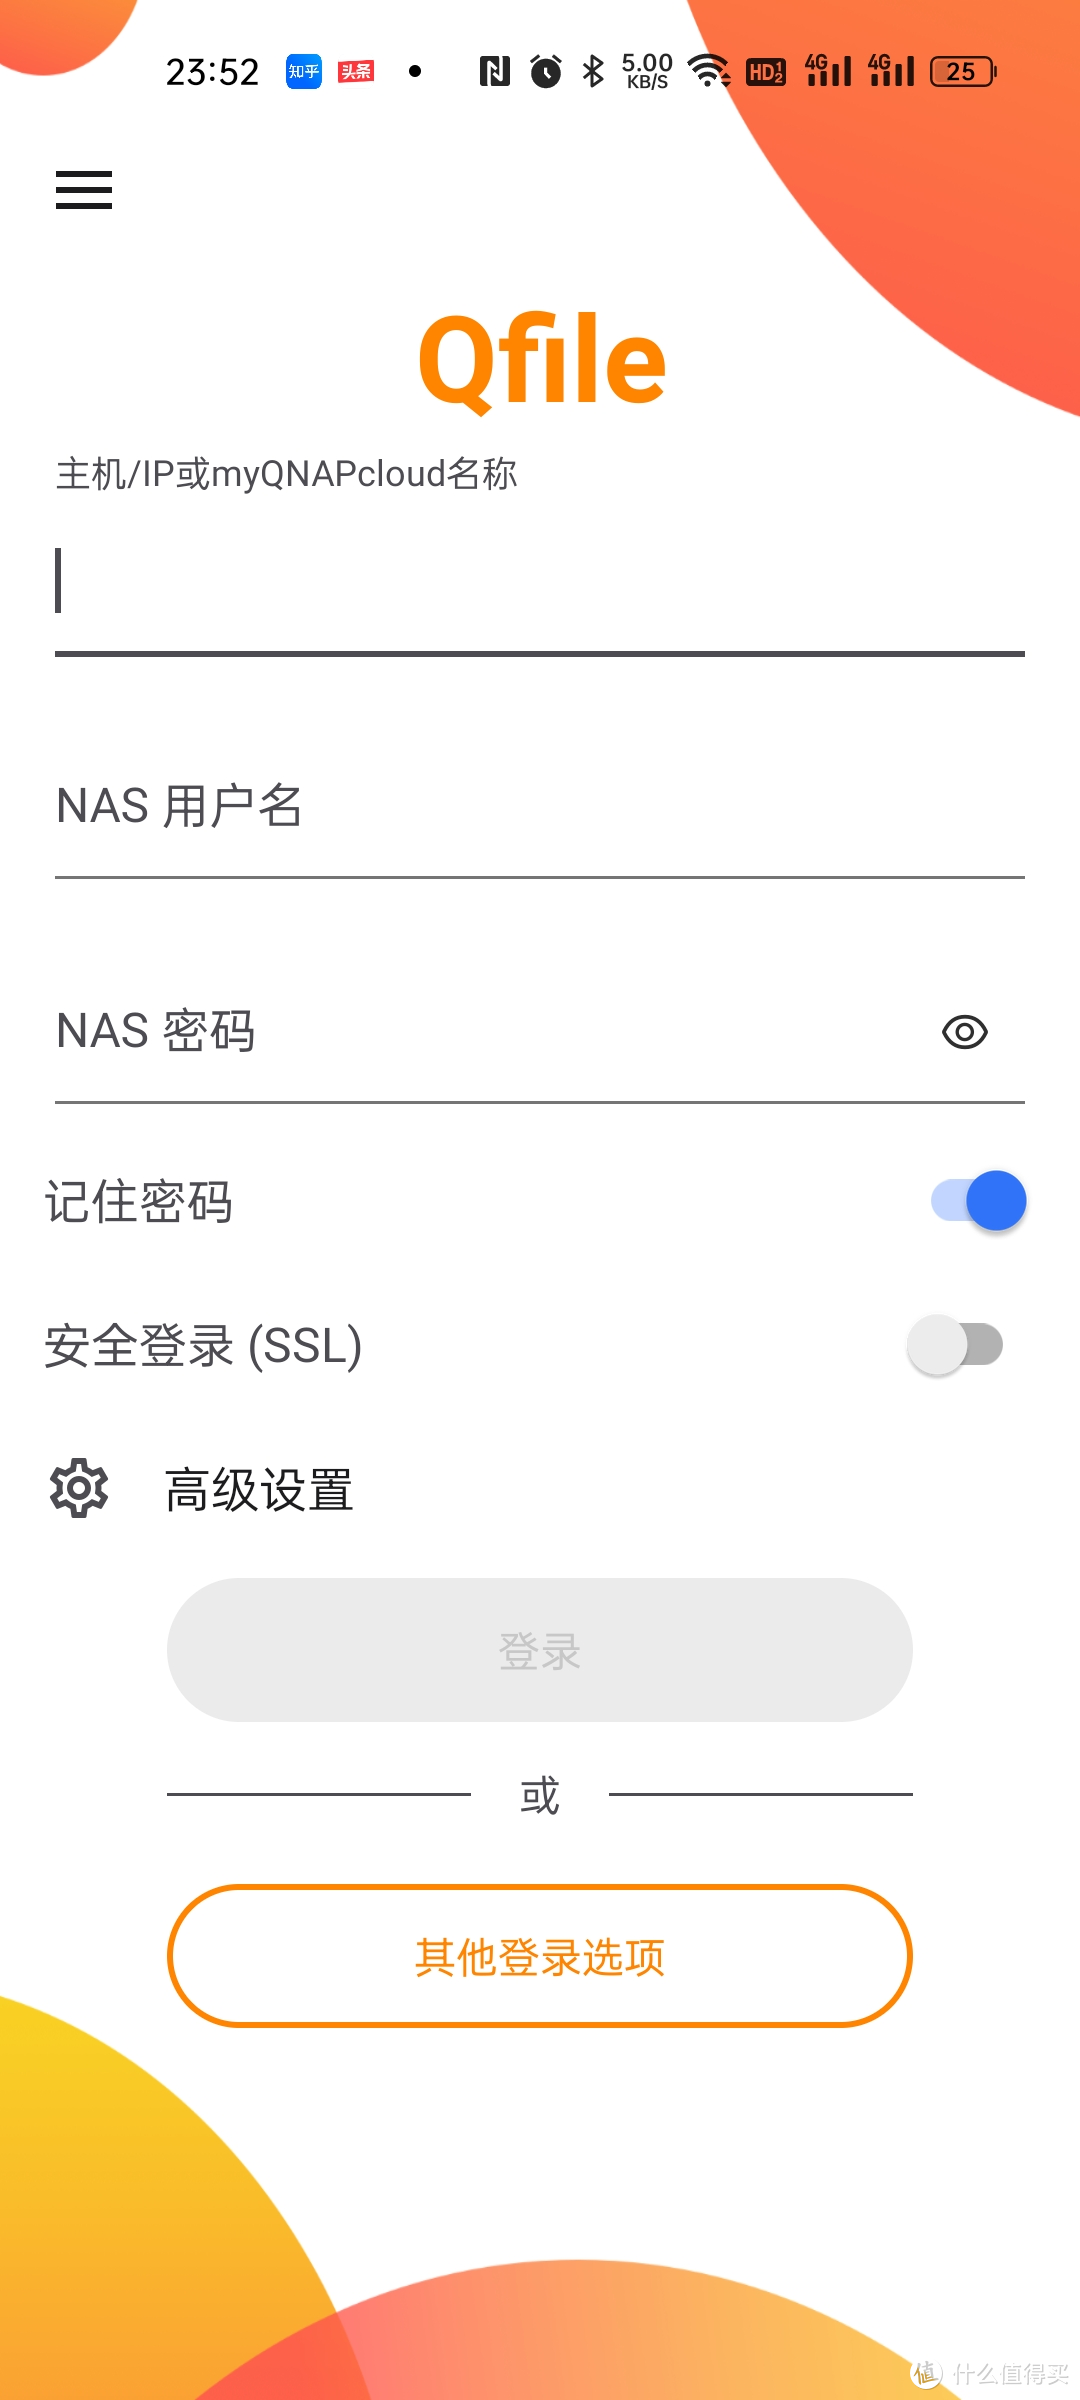 NAS新手指南：备份、博客、影音、外网全搞定，附威联通TS-216+东芝N300体验